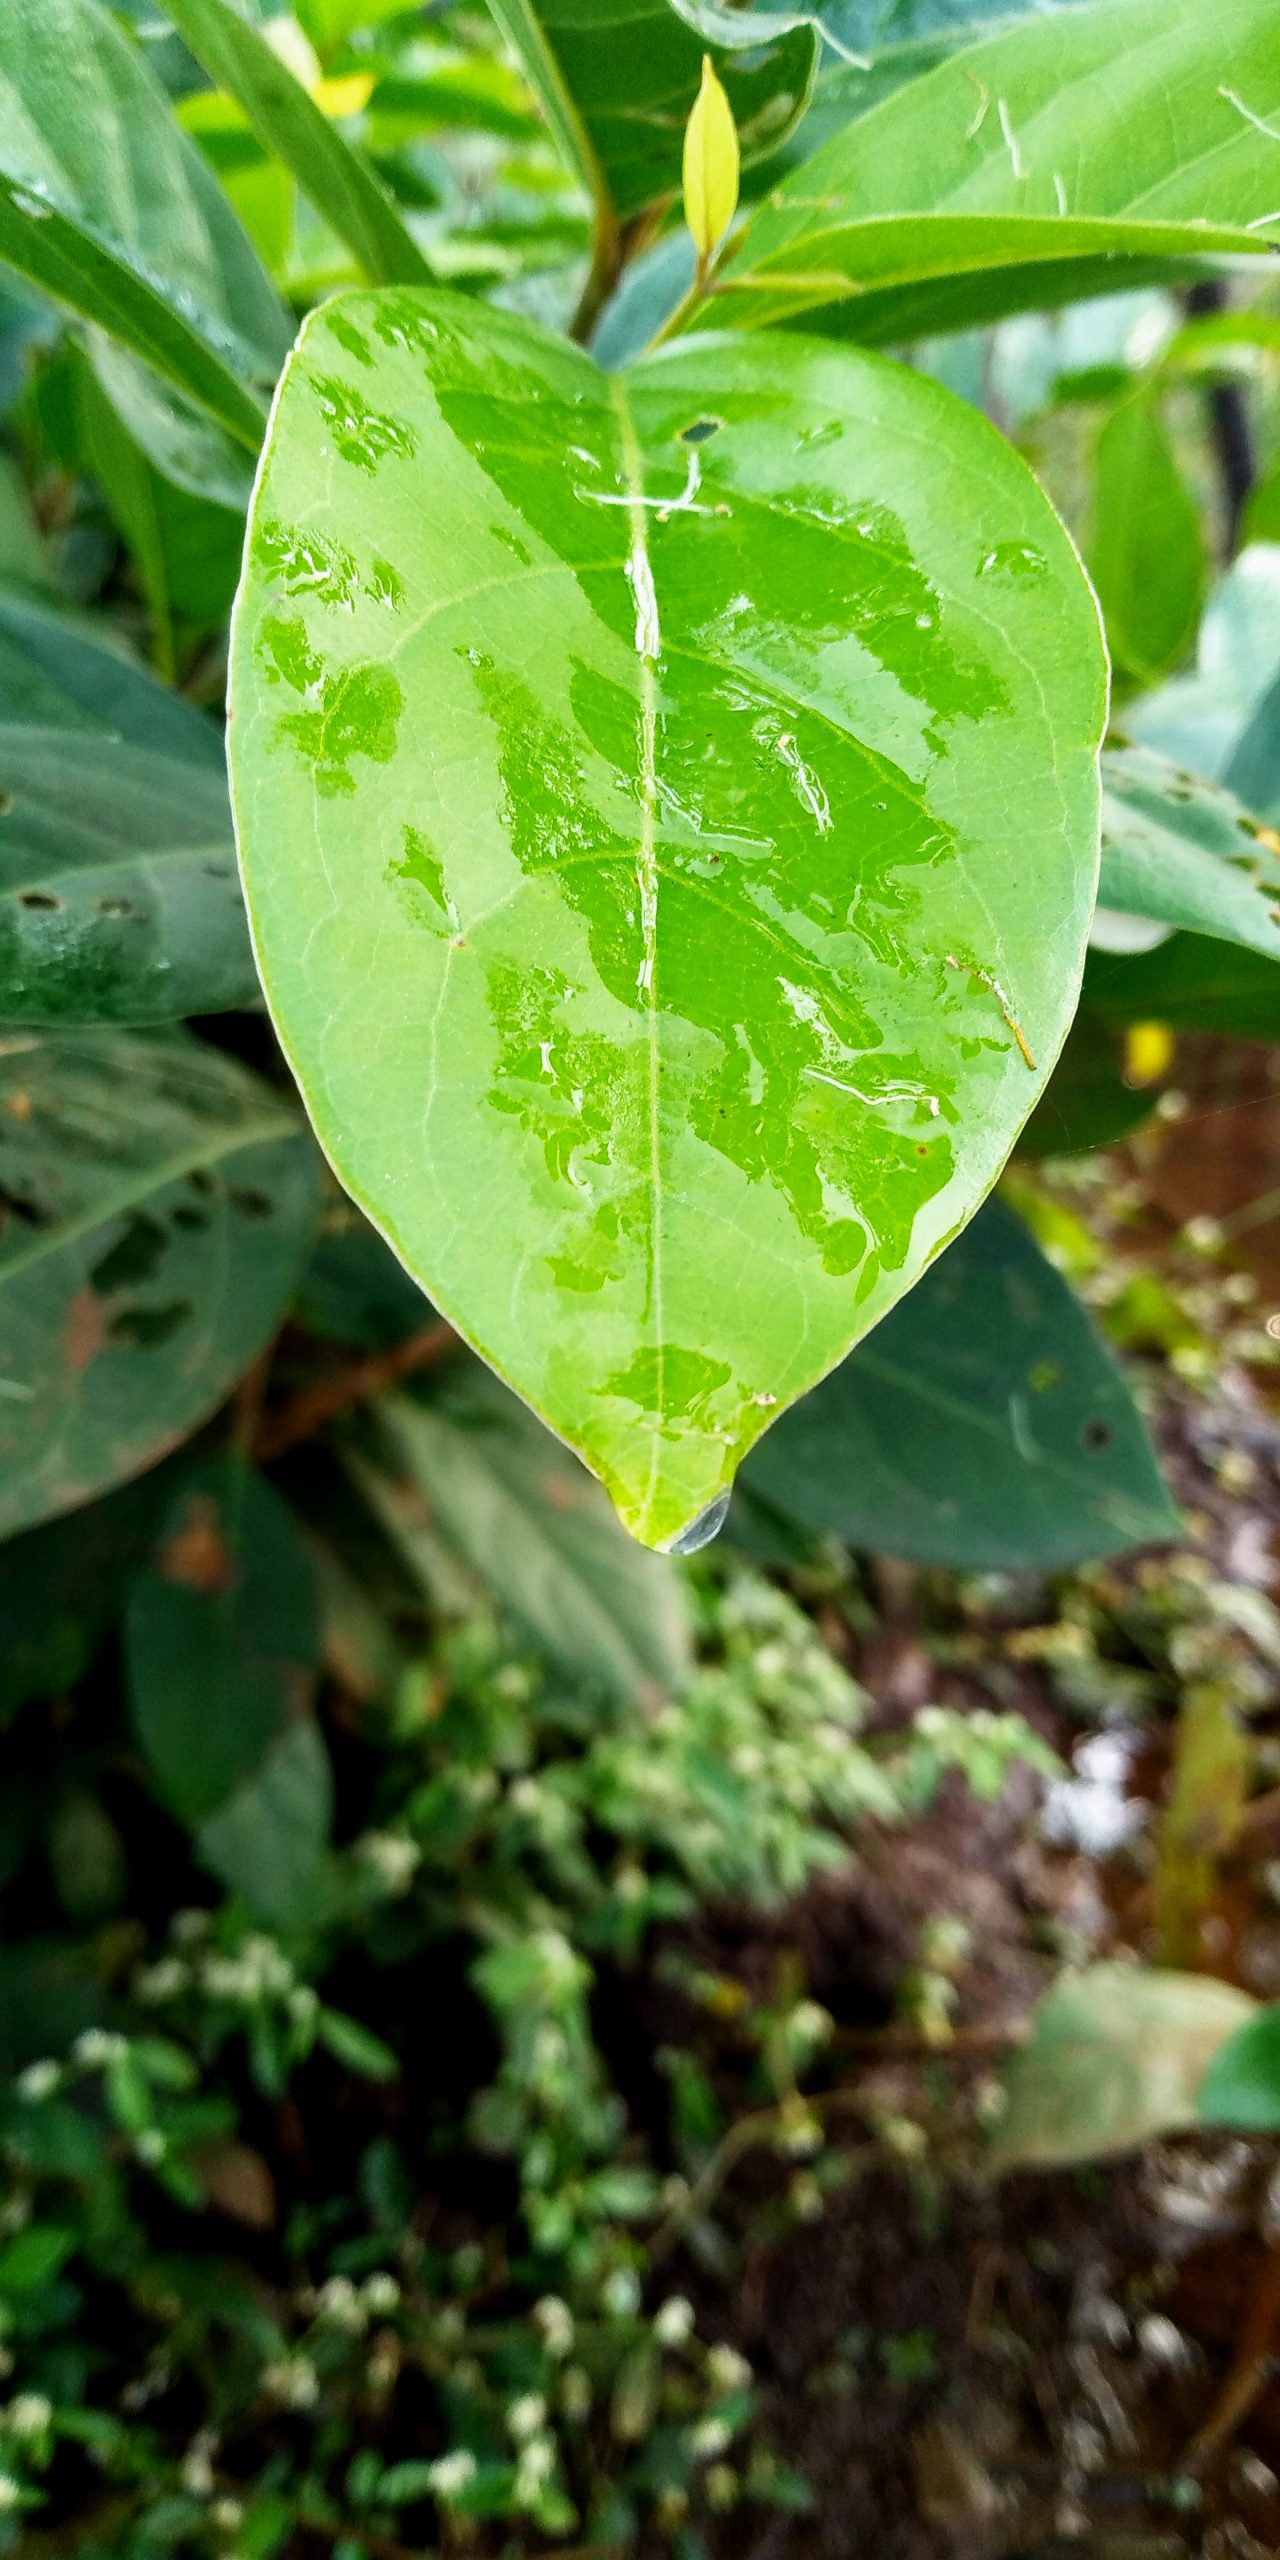 leaf of a plant